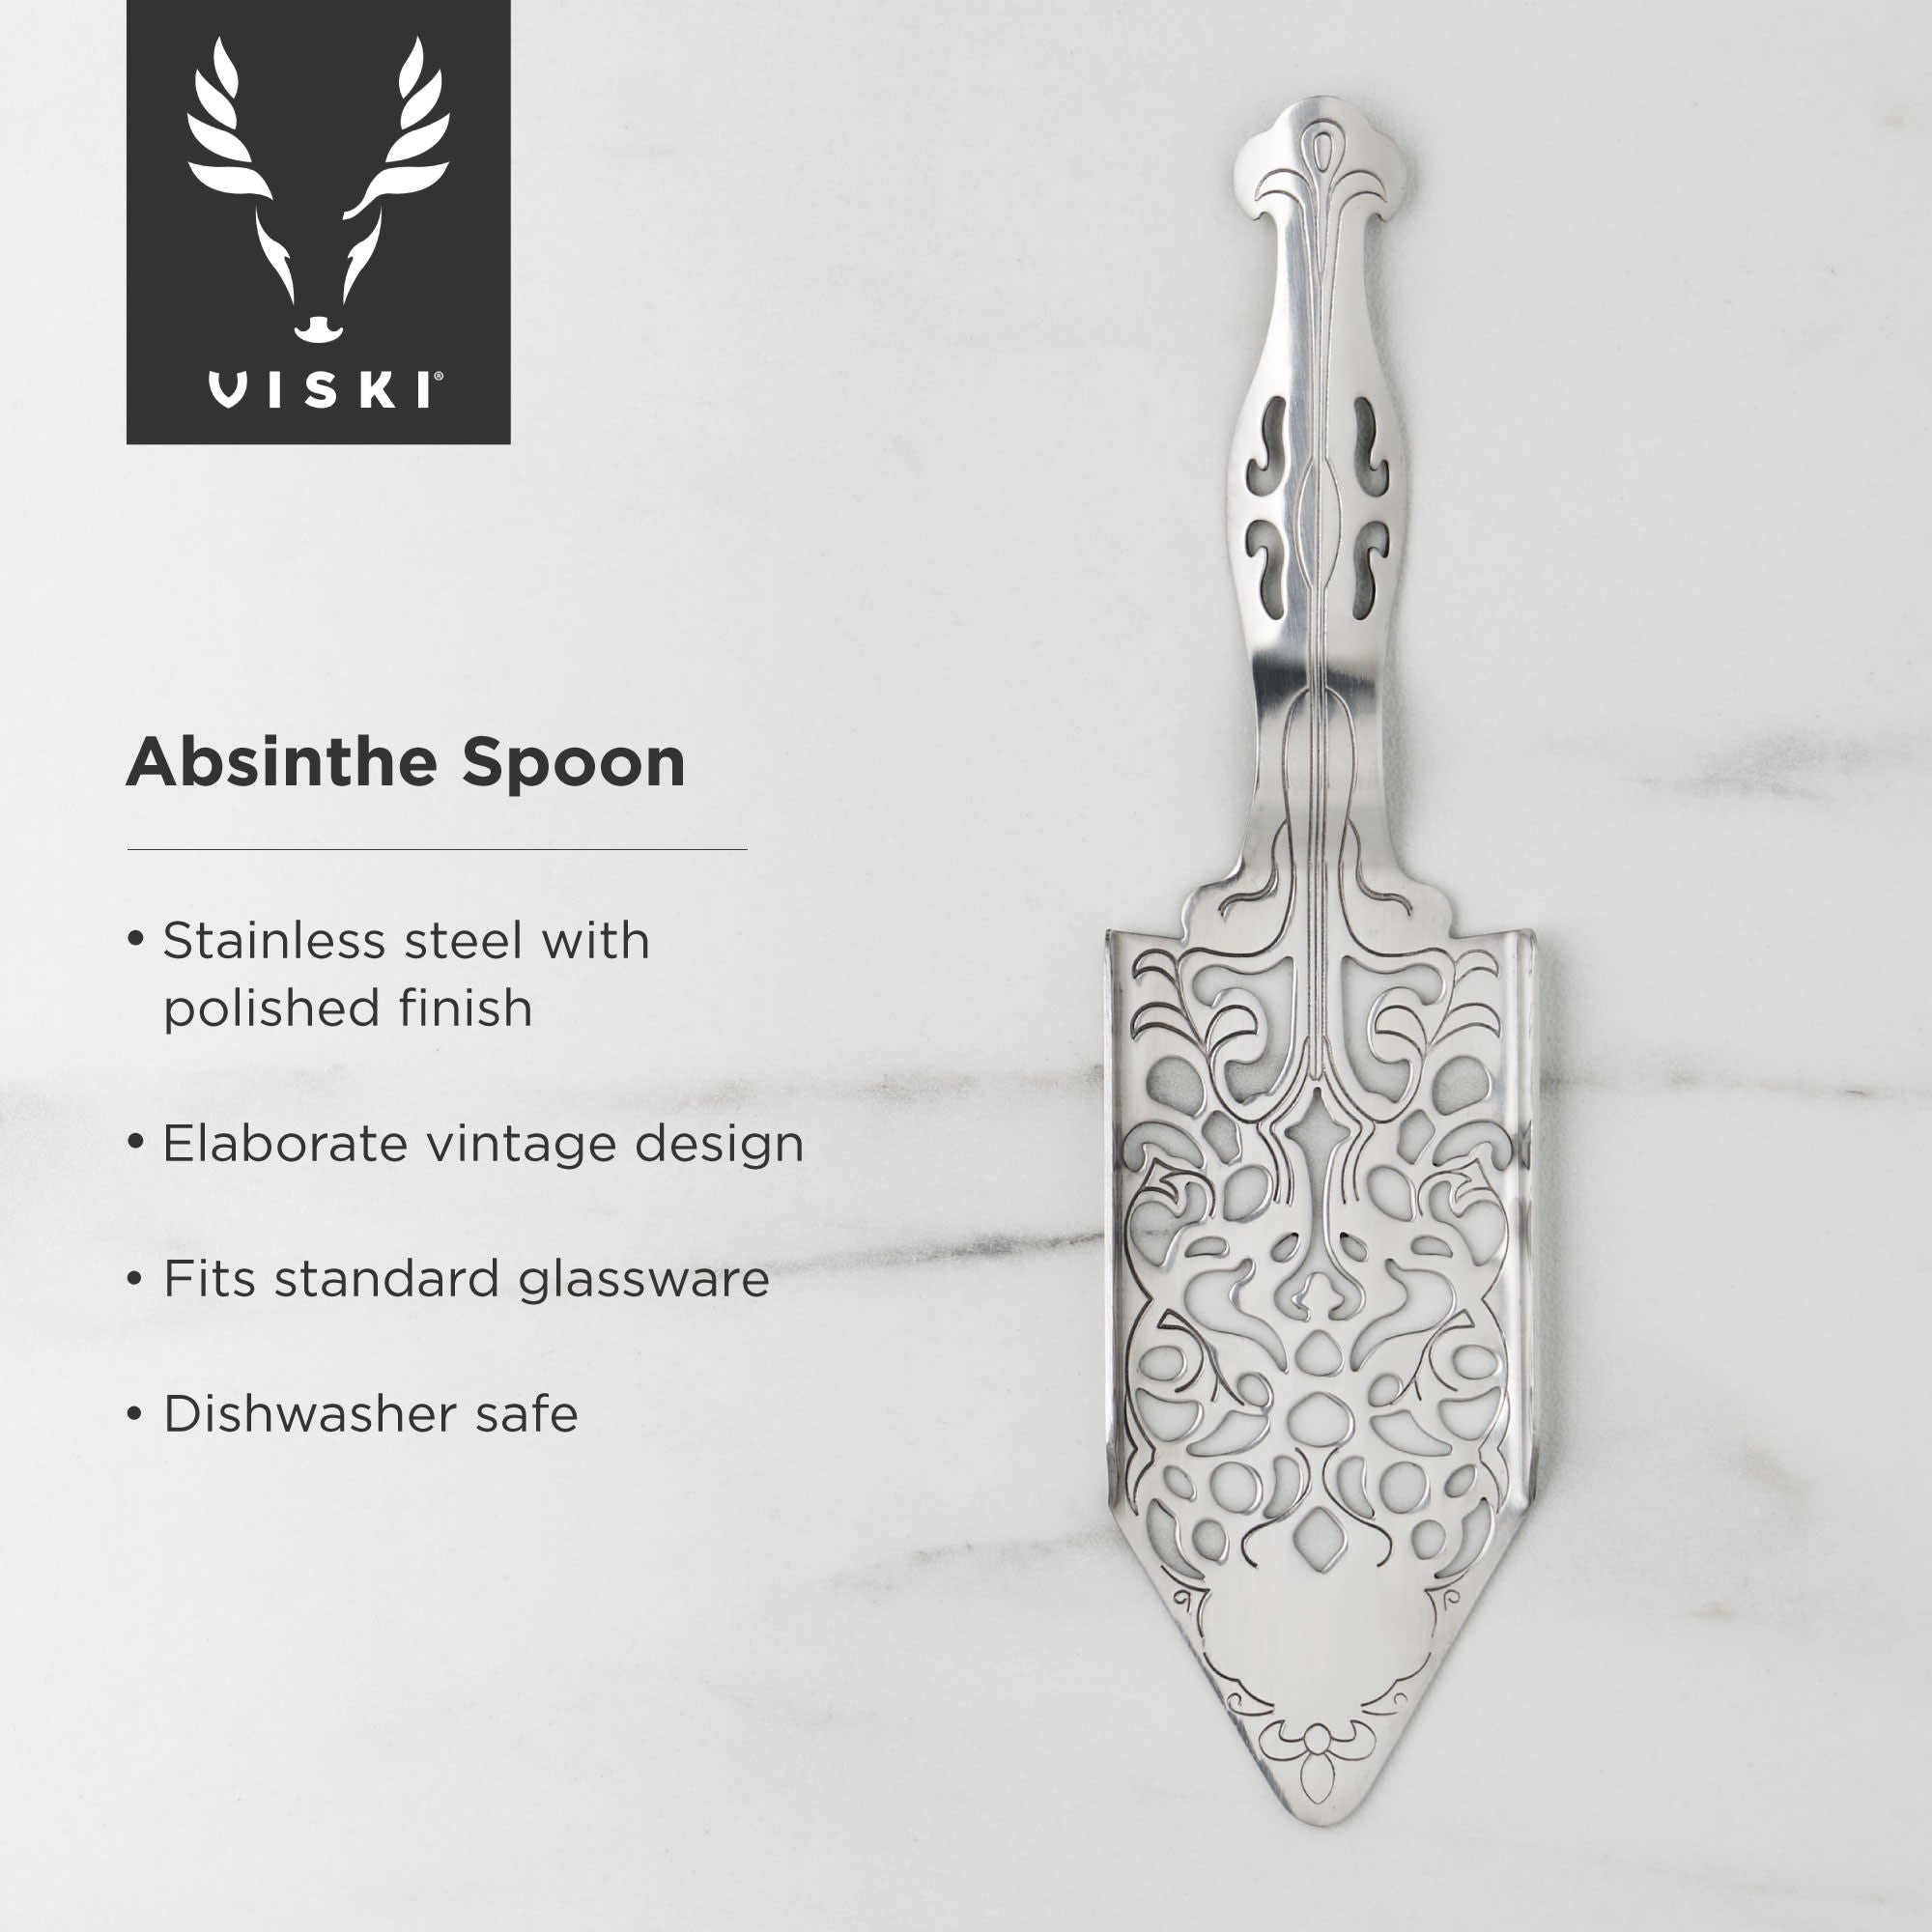 Absinthe Spoon by Viski (11244)